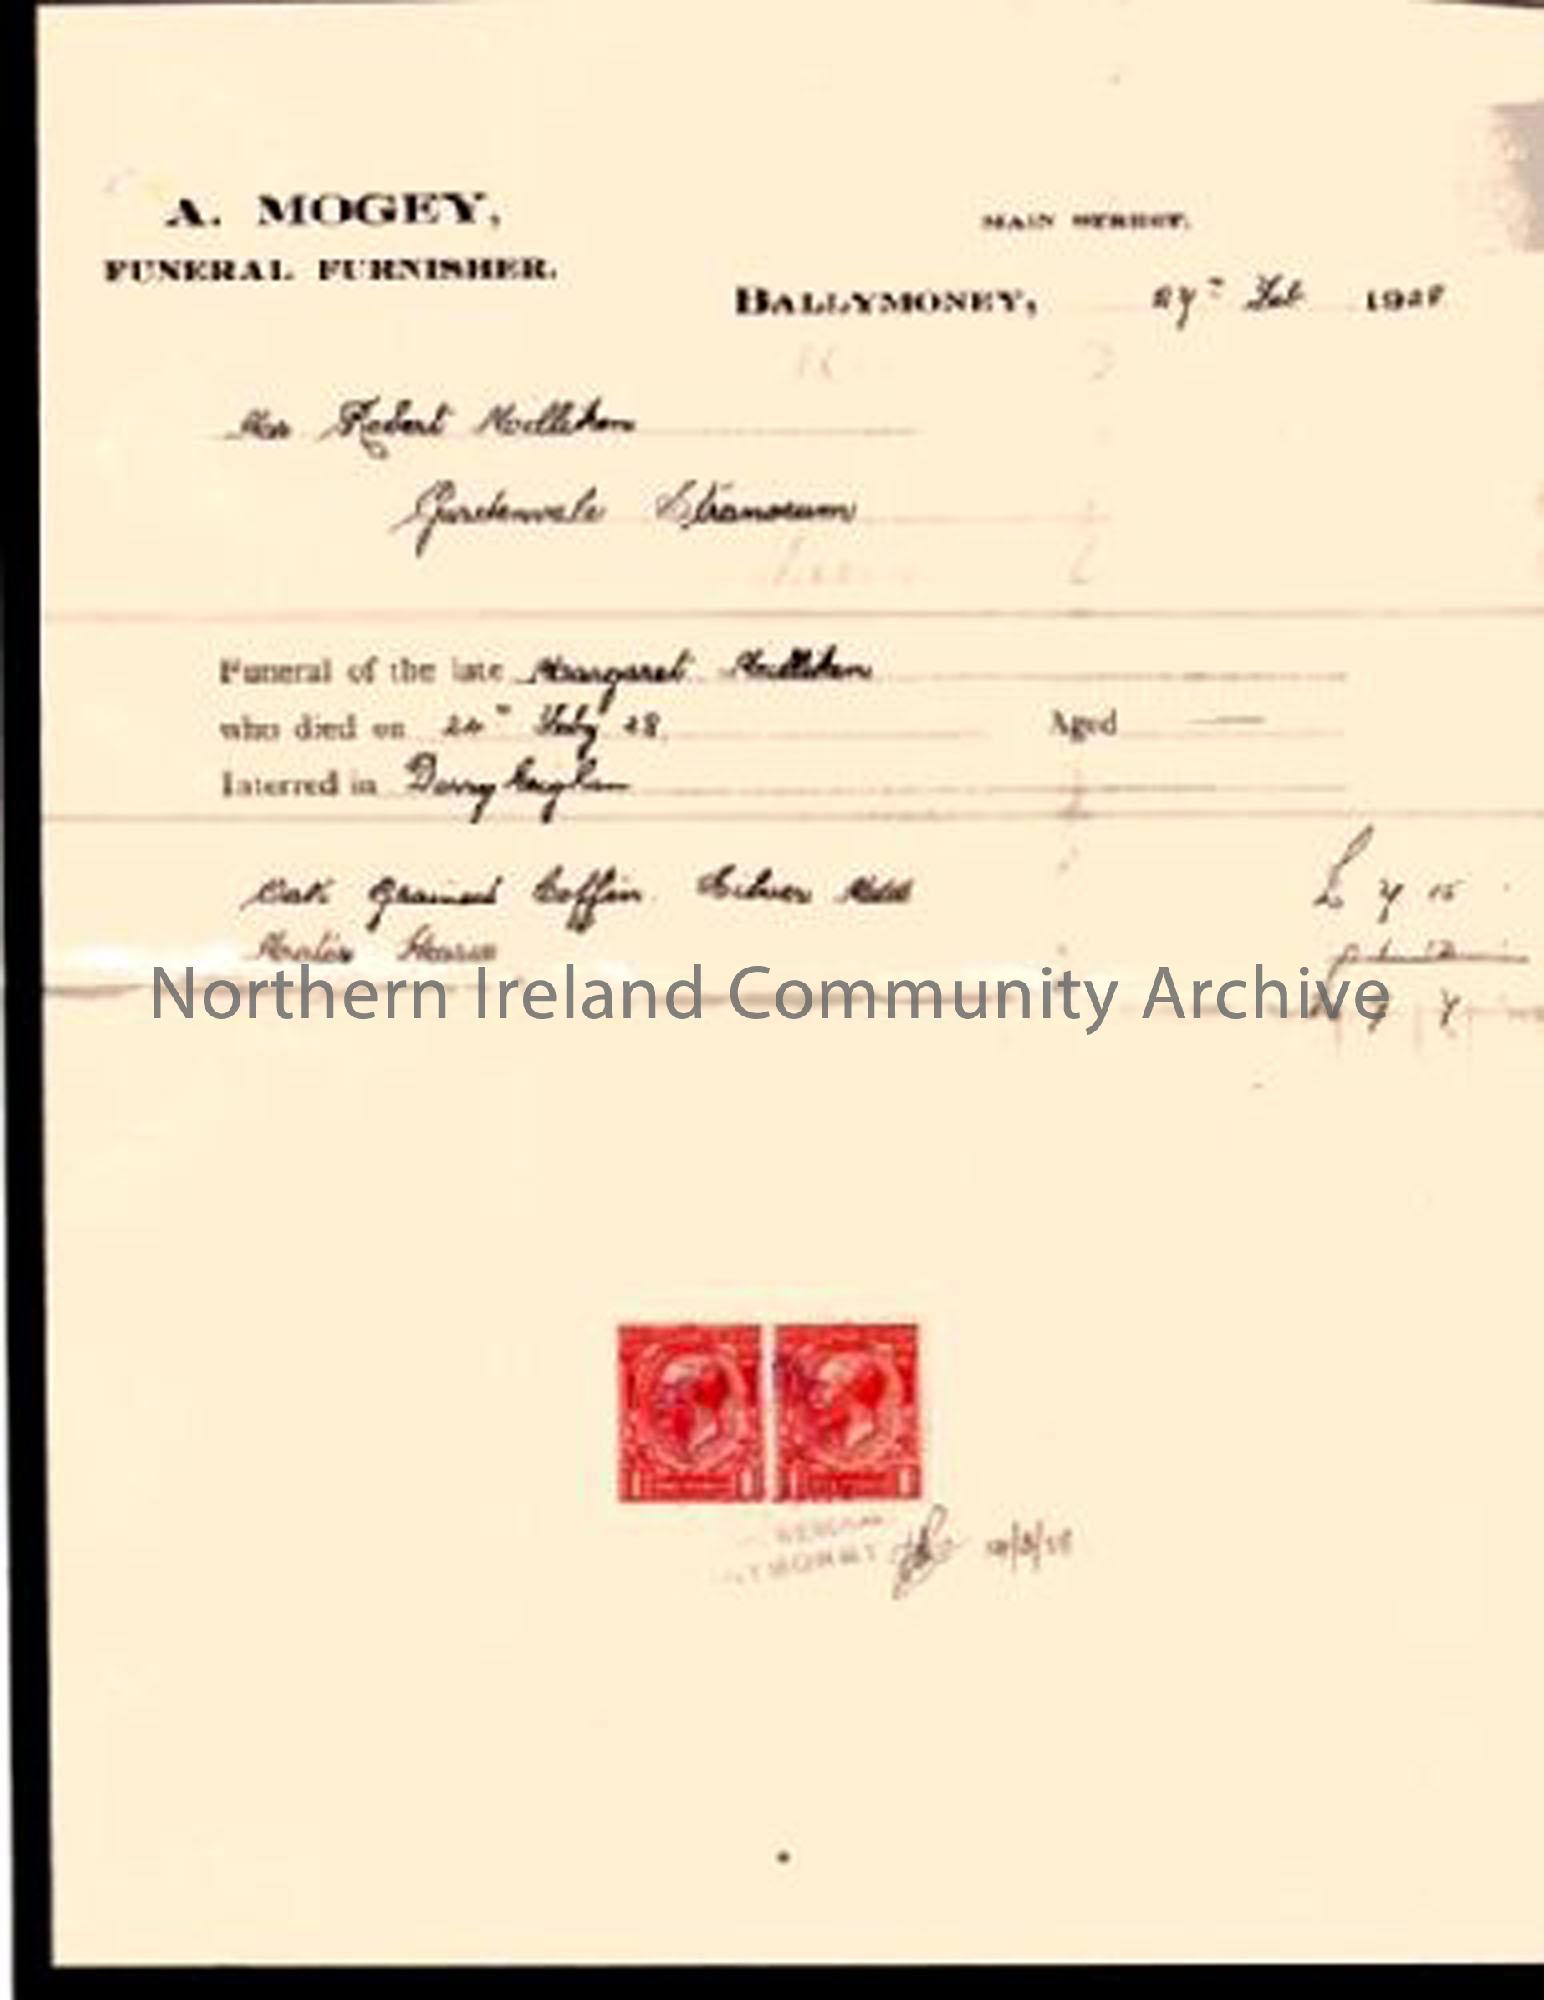 Funeral receipt from A. Mogey, Funeral Director, Ballymoney, to Robert Milliken for the funeral of Margaret Milliken, 1928 (1064)